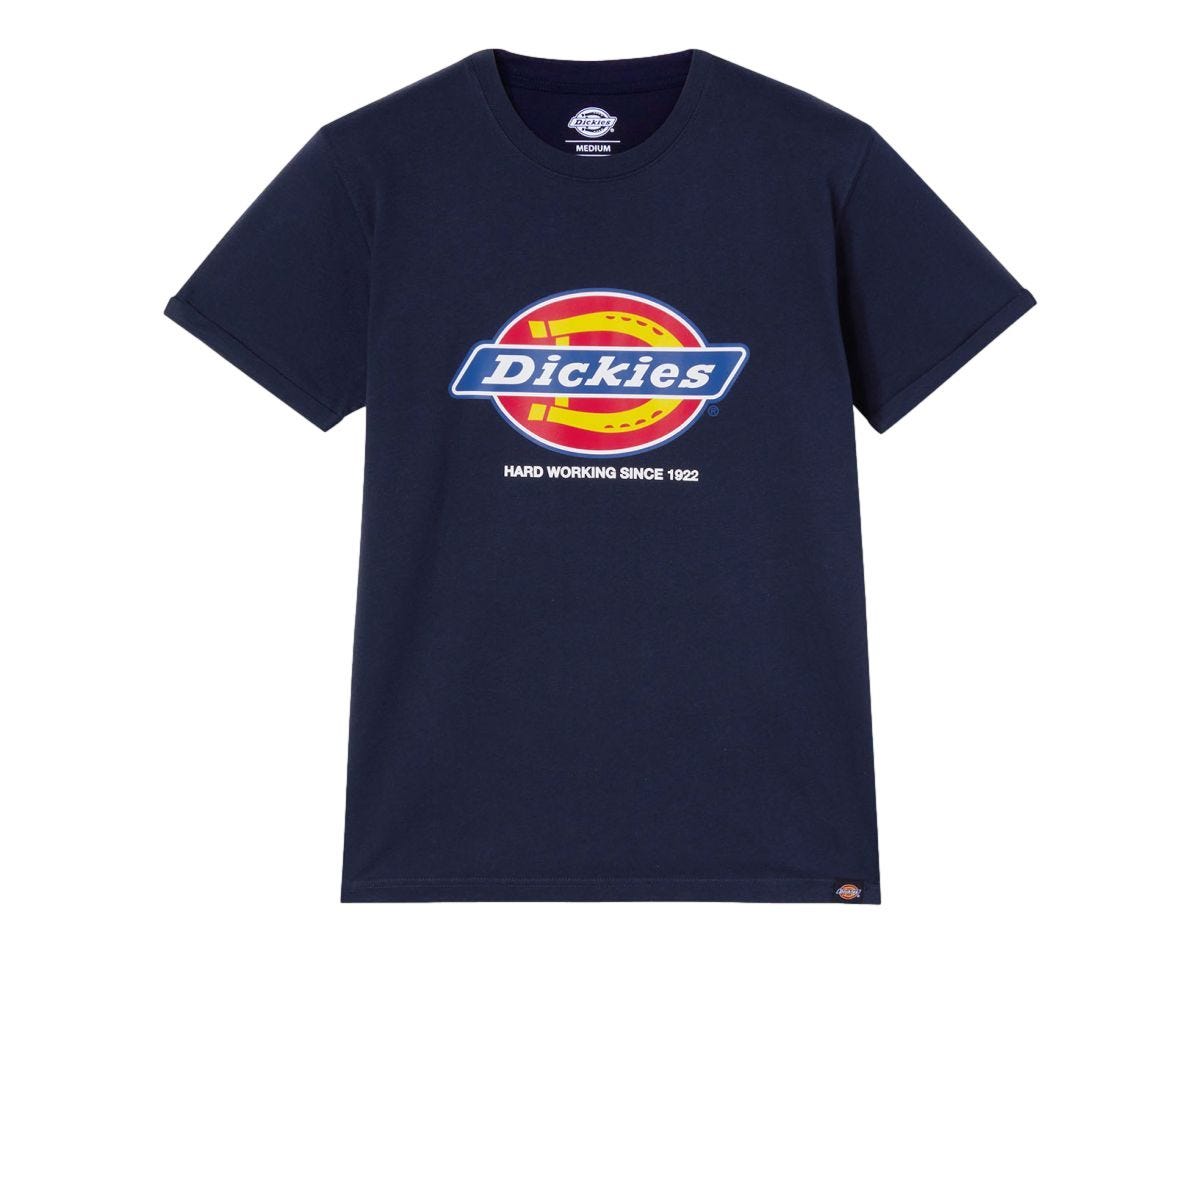 T-shirt de travail Denison bleu marine - Dickies - Taille L 1